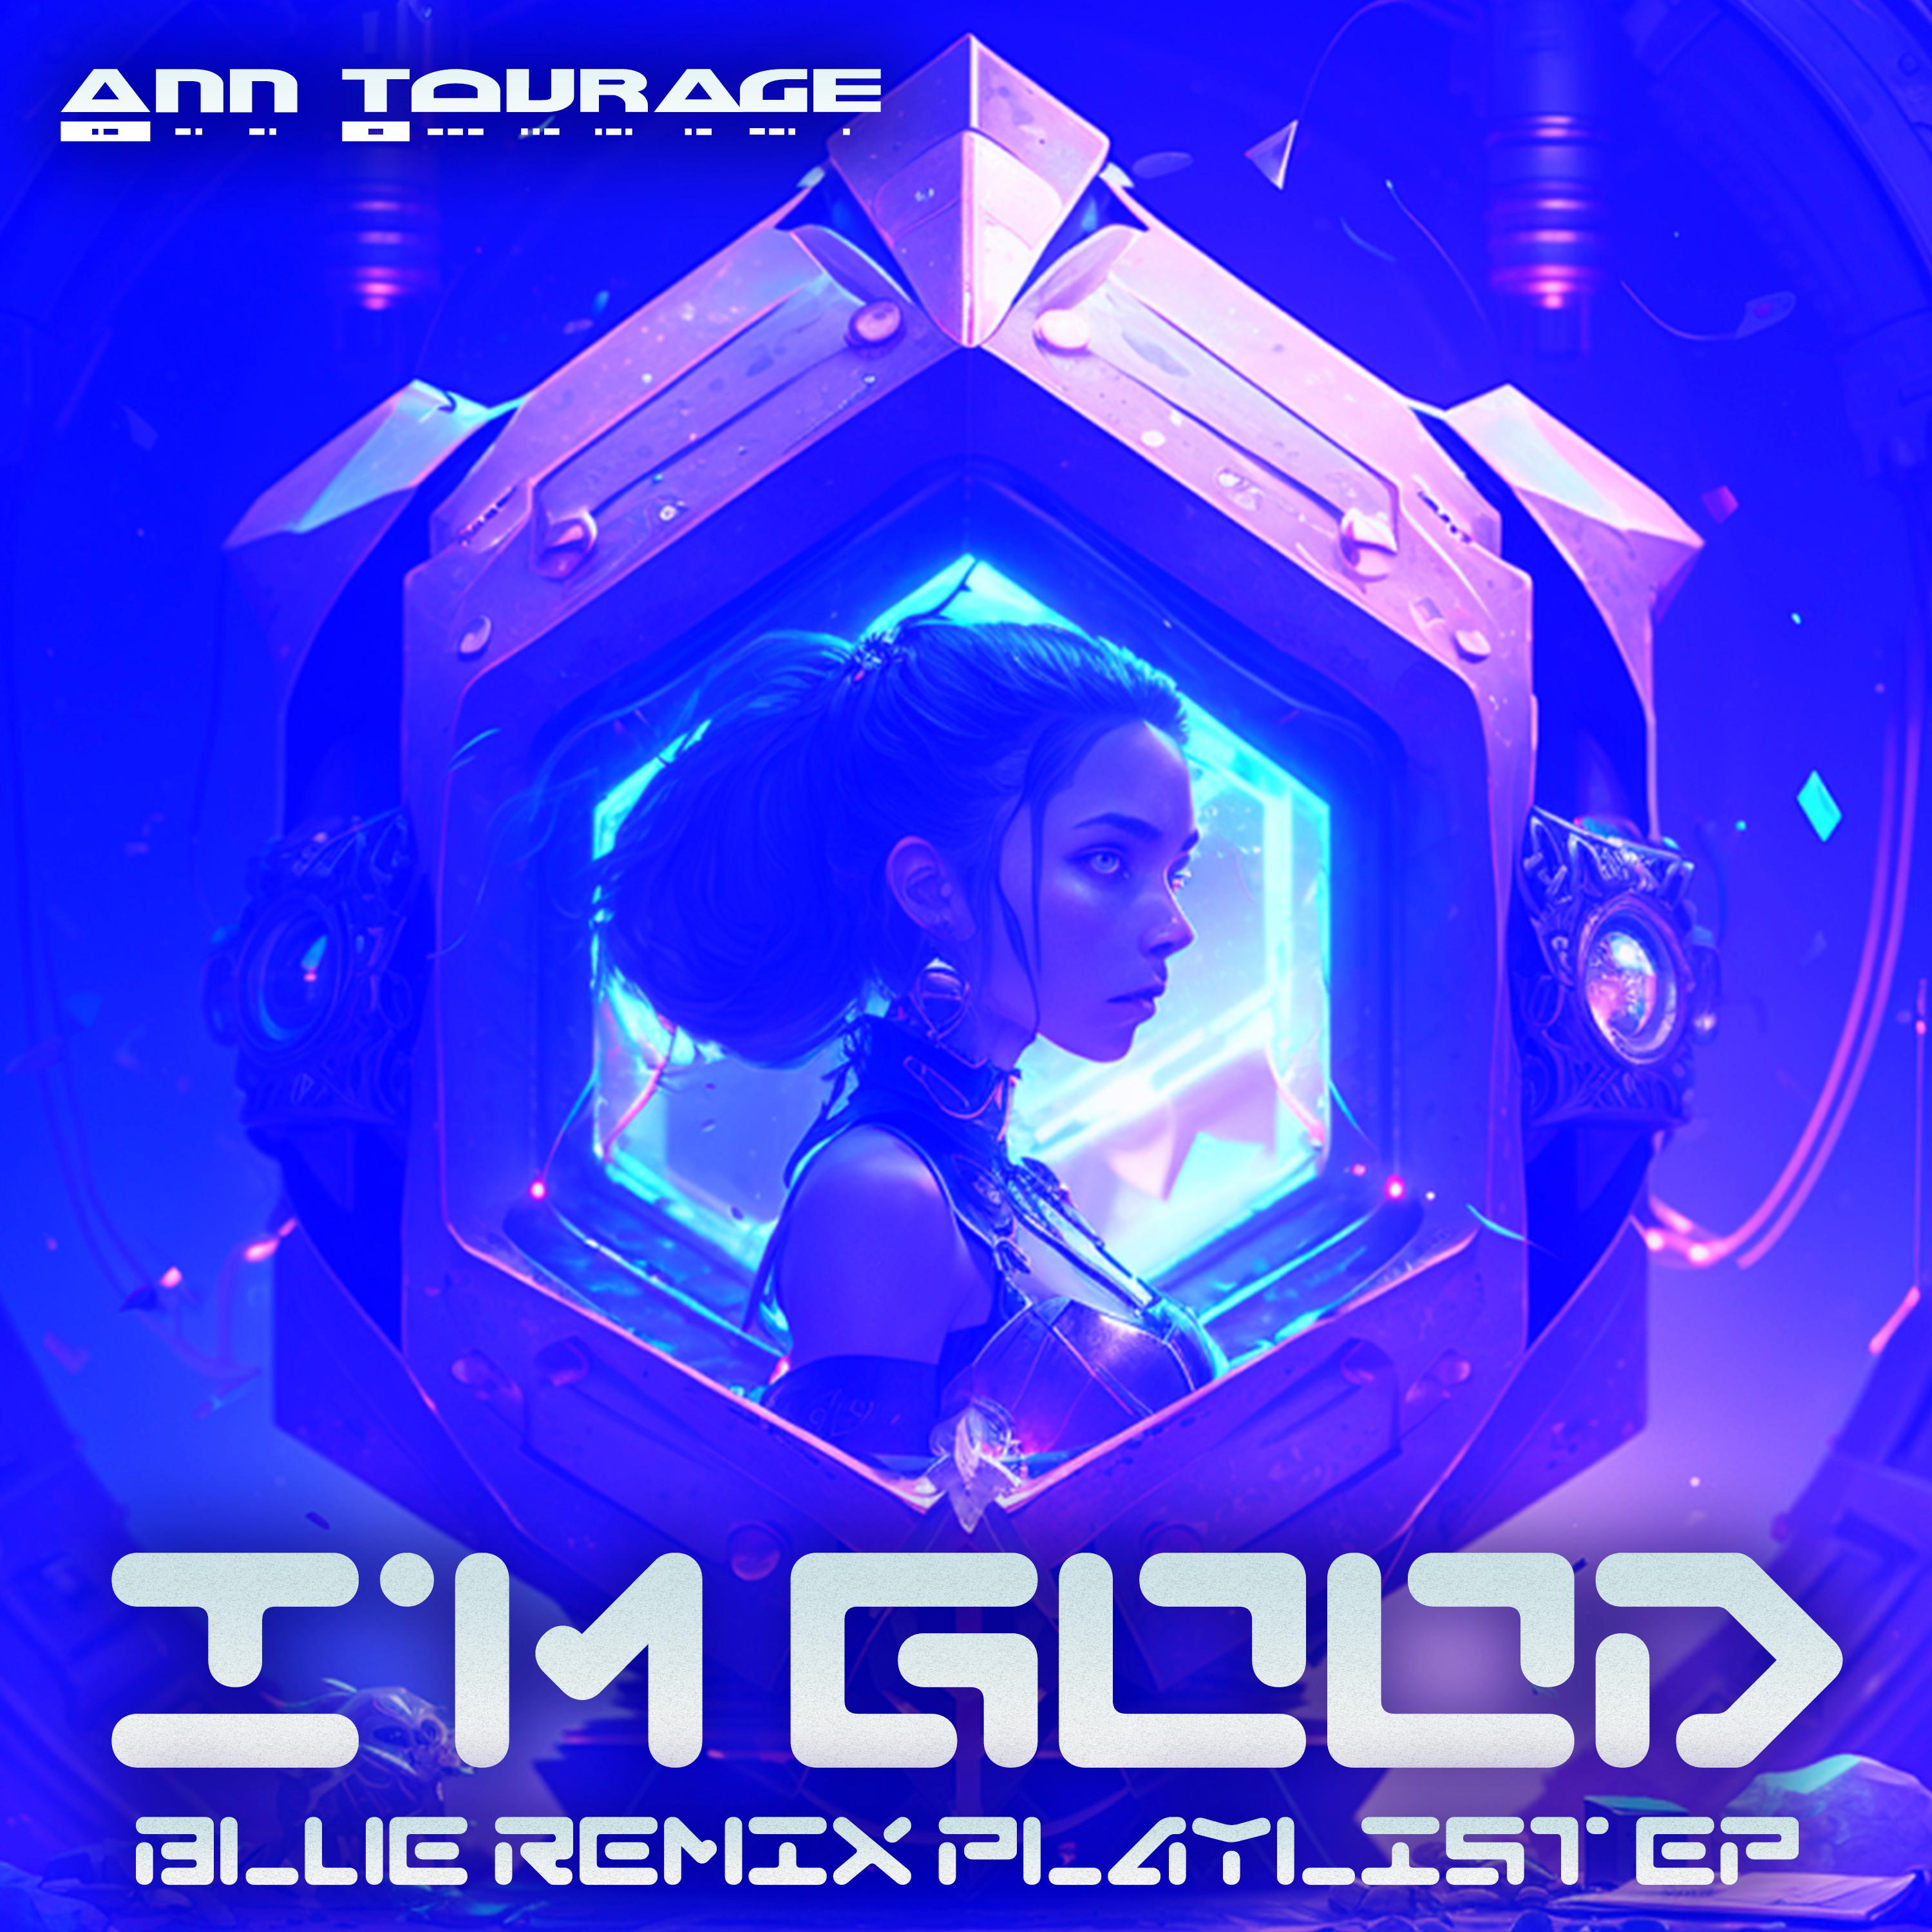 Ann Tourage - I'm Good (Iker Sadaba 80s Hits Playlist Remix)